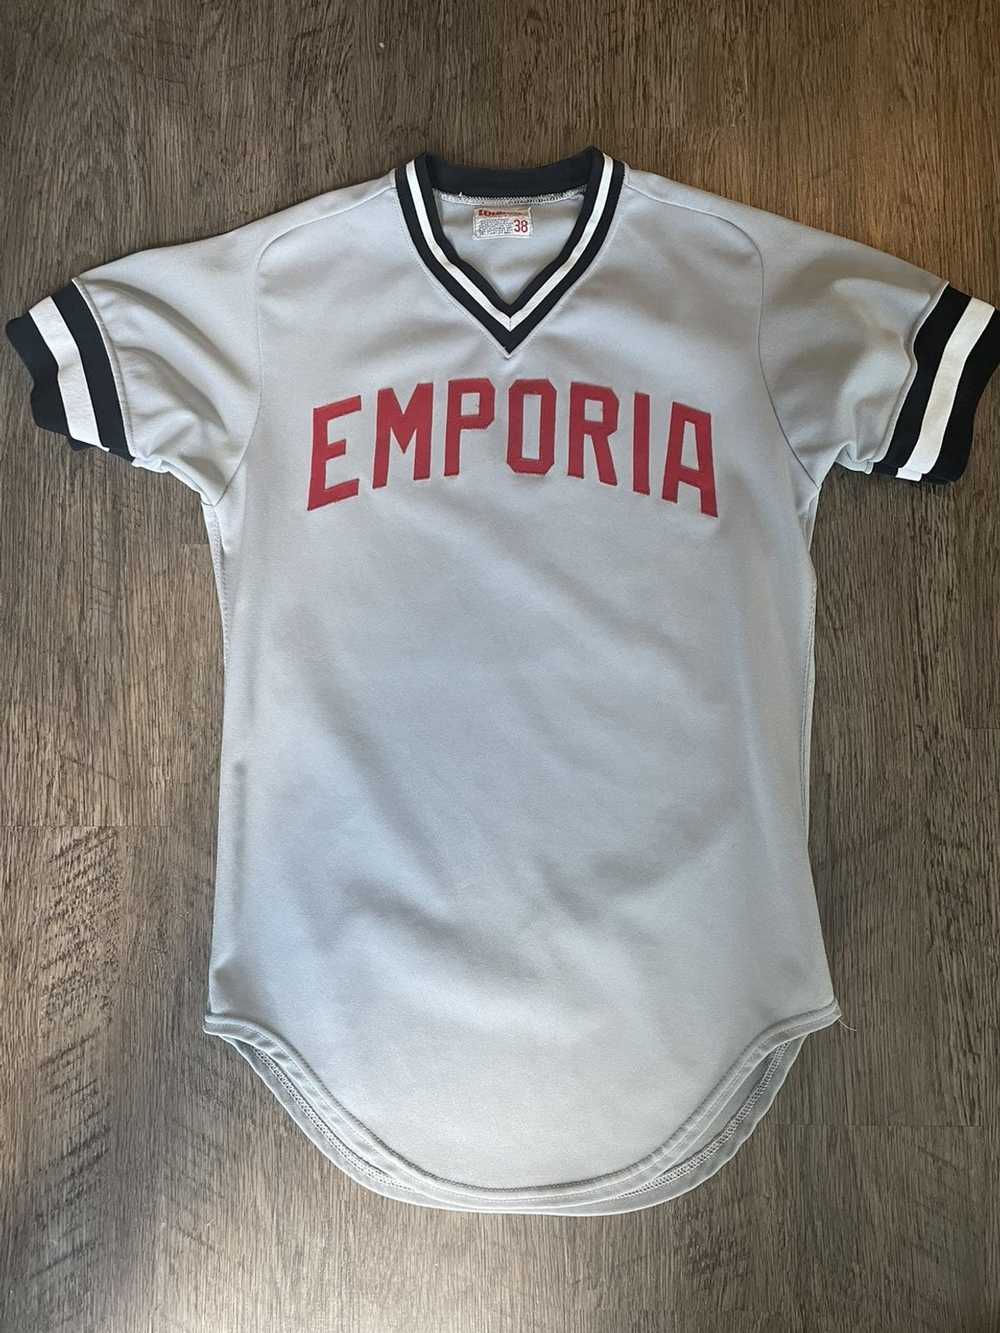 Vintage Vintage Custom Emporia Jersey - image 1